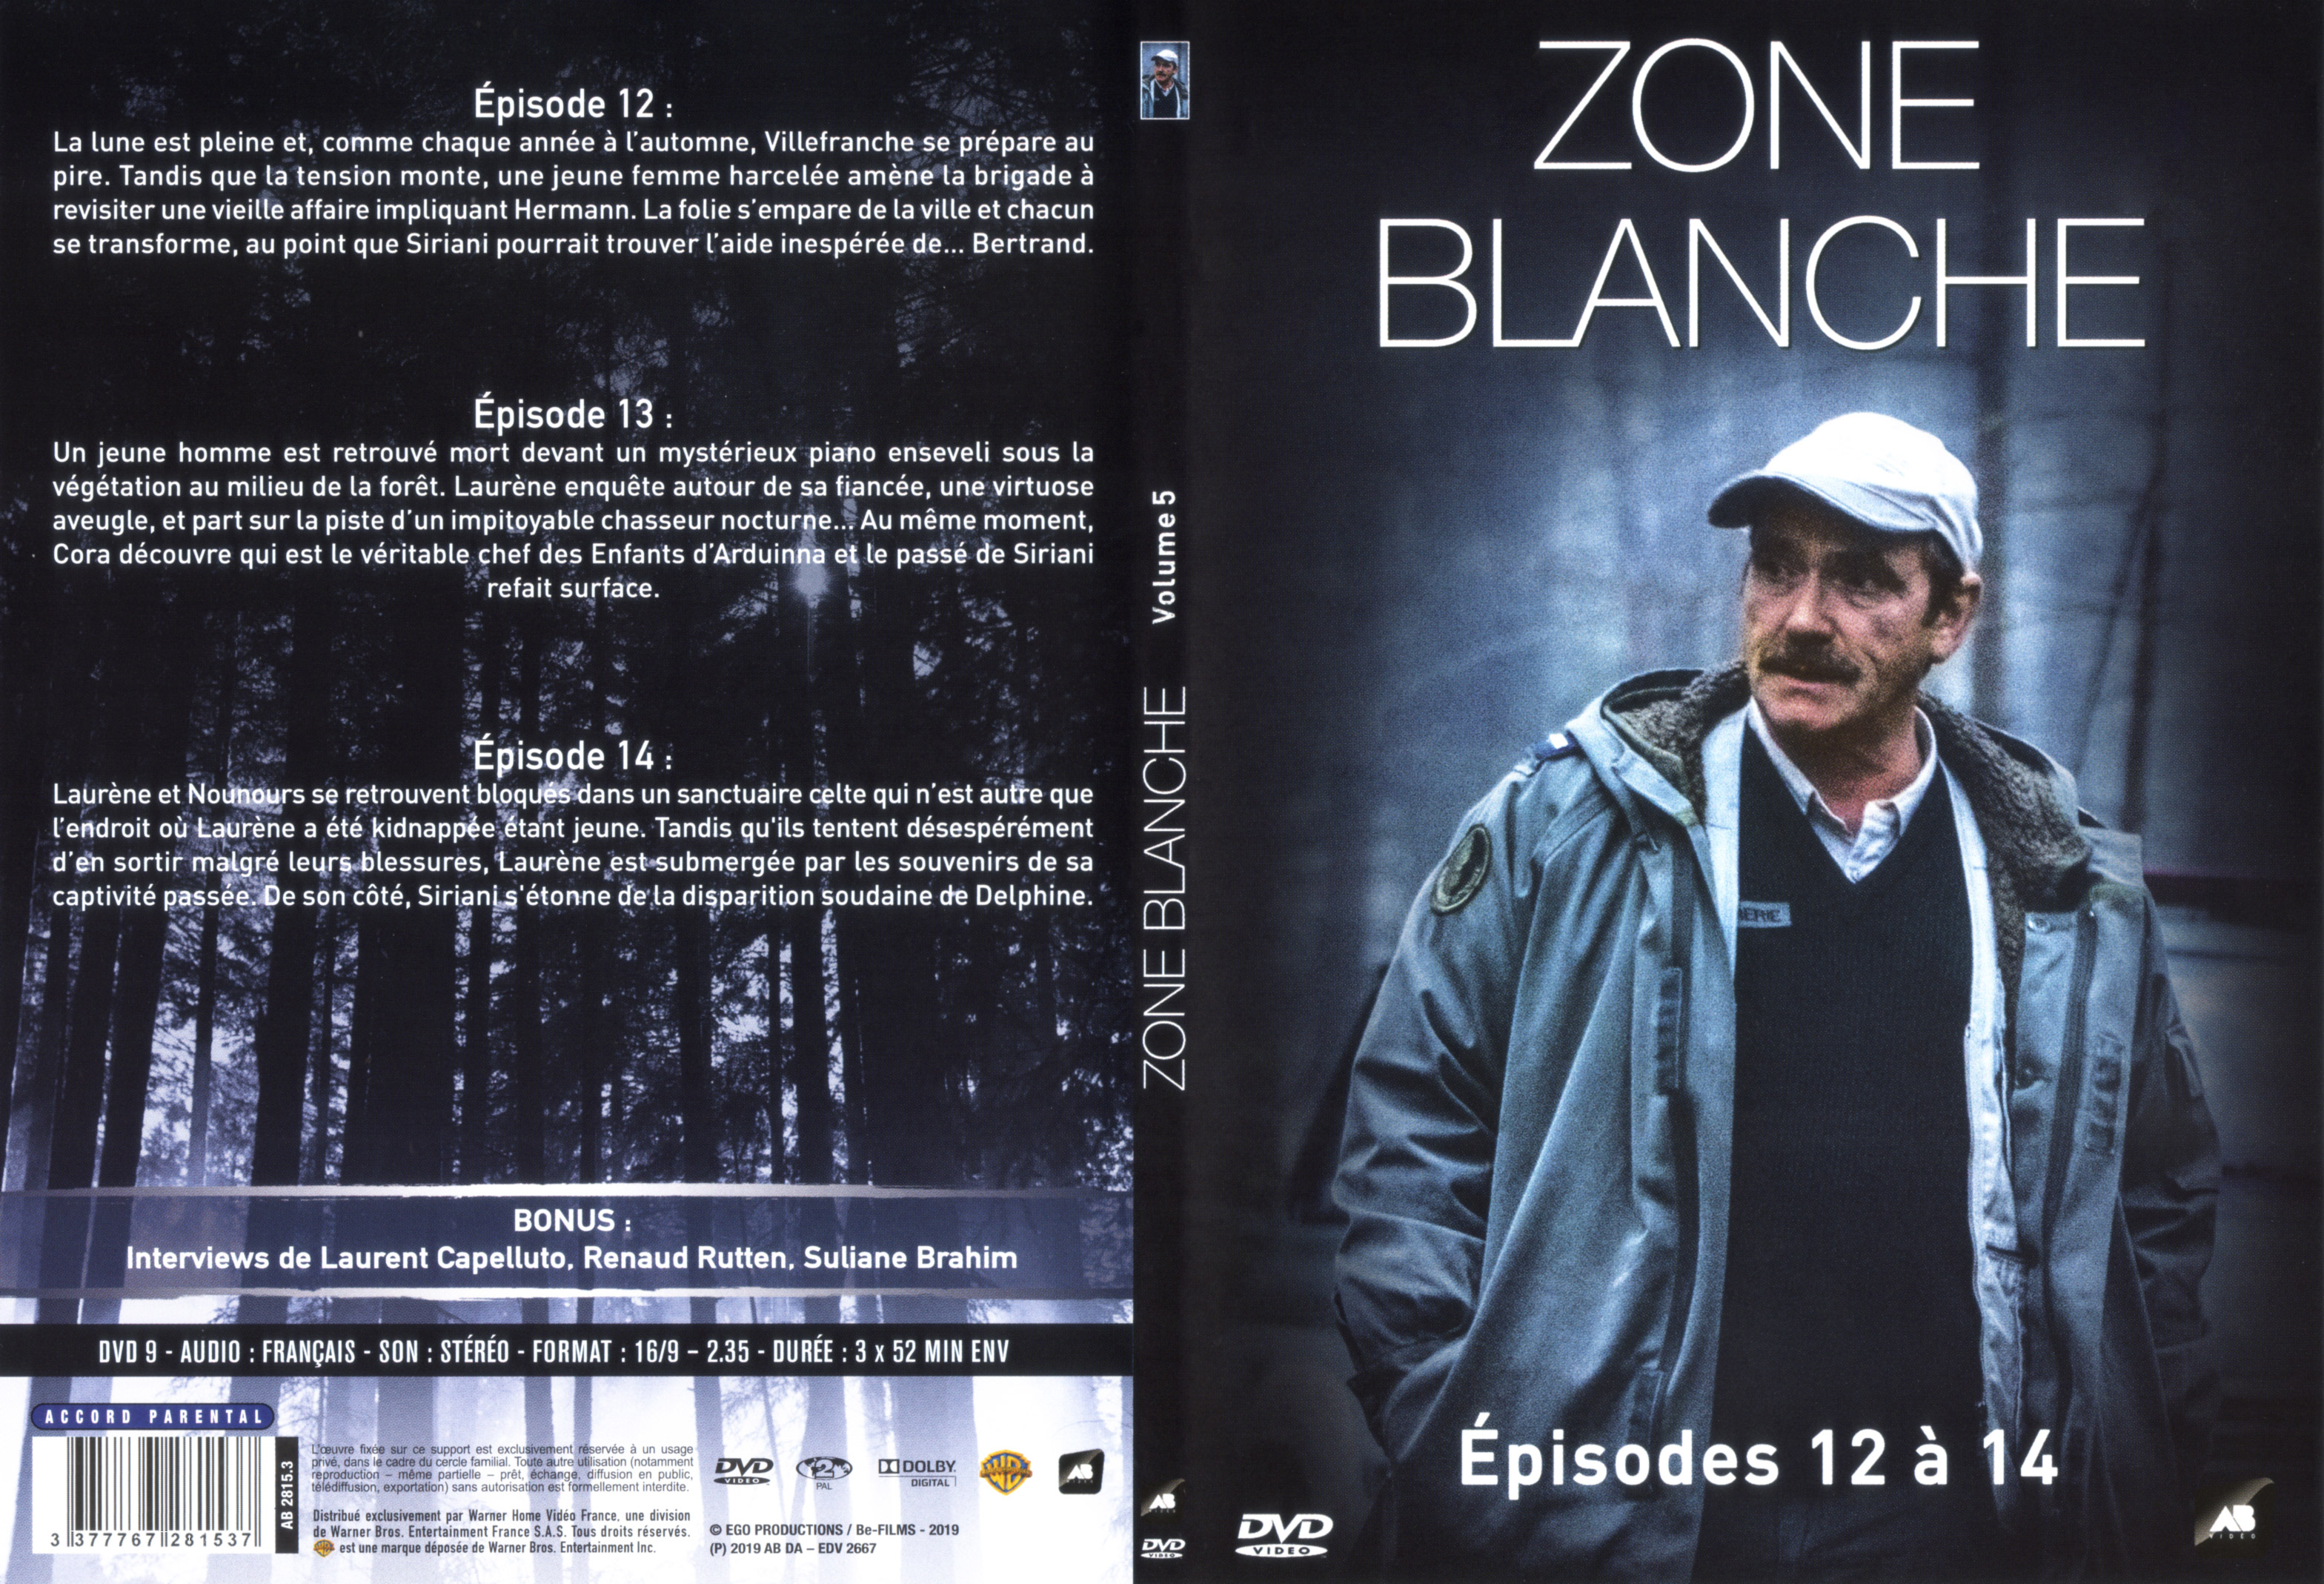 Jaquette DVD Zone blanche pisode 12-13-14